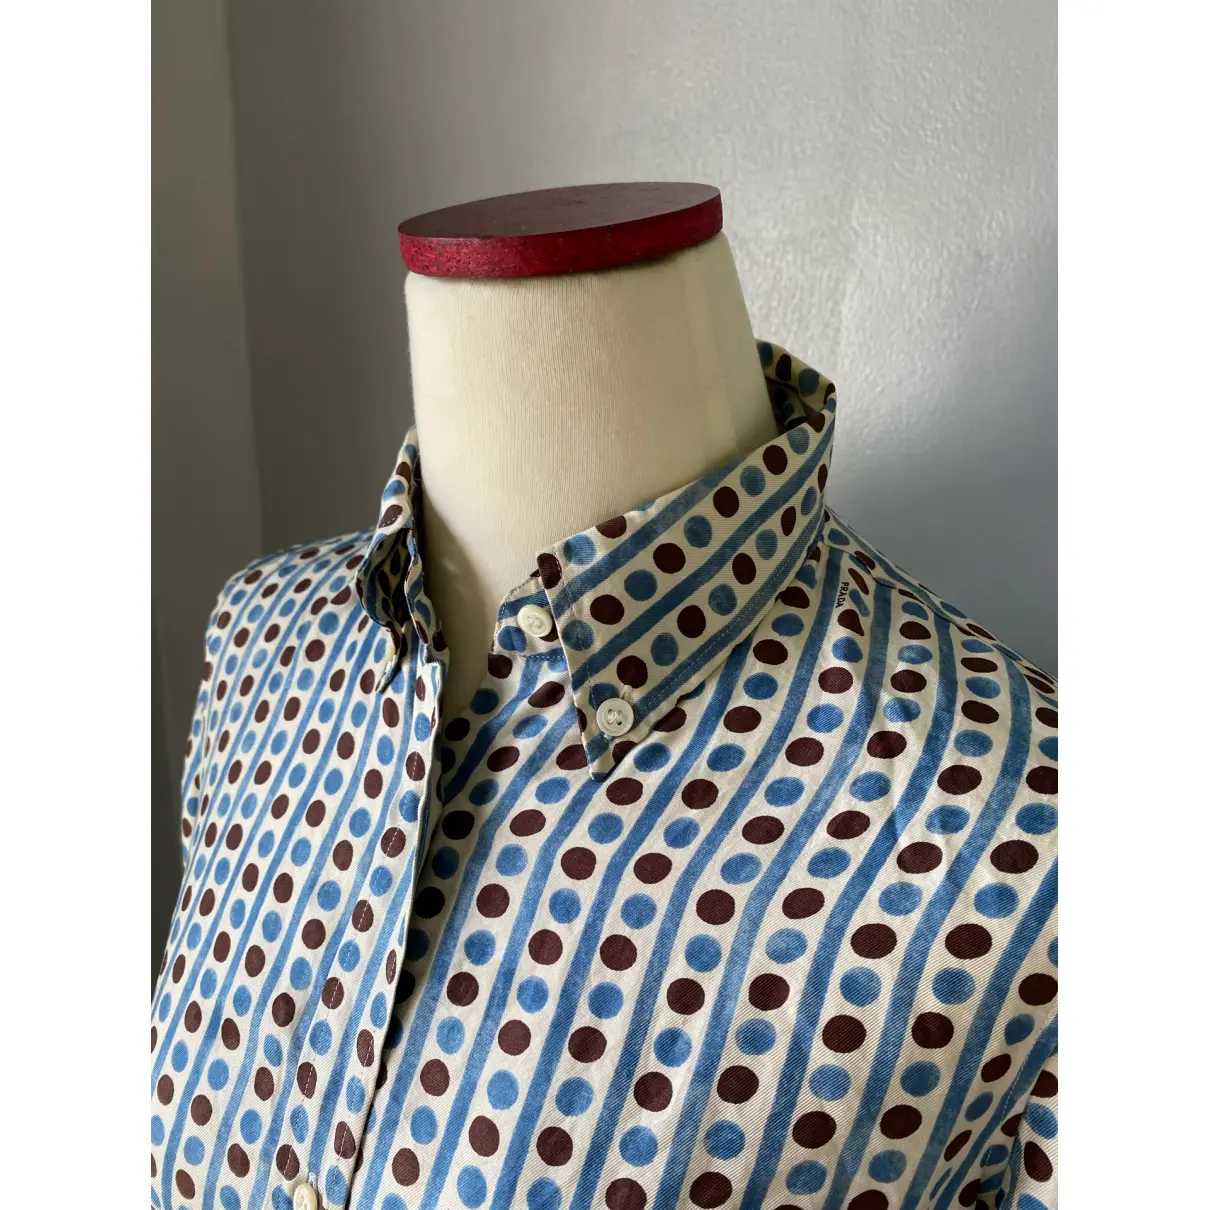 Buy Prada Silk shirt online